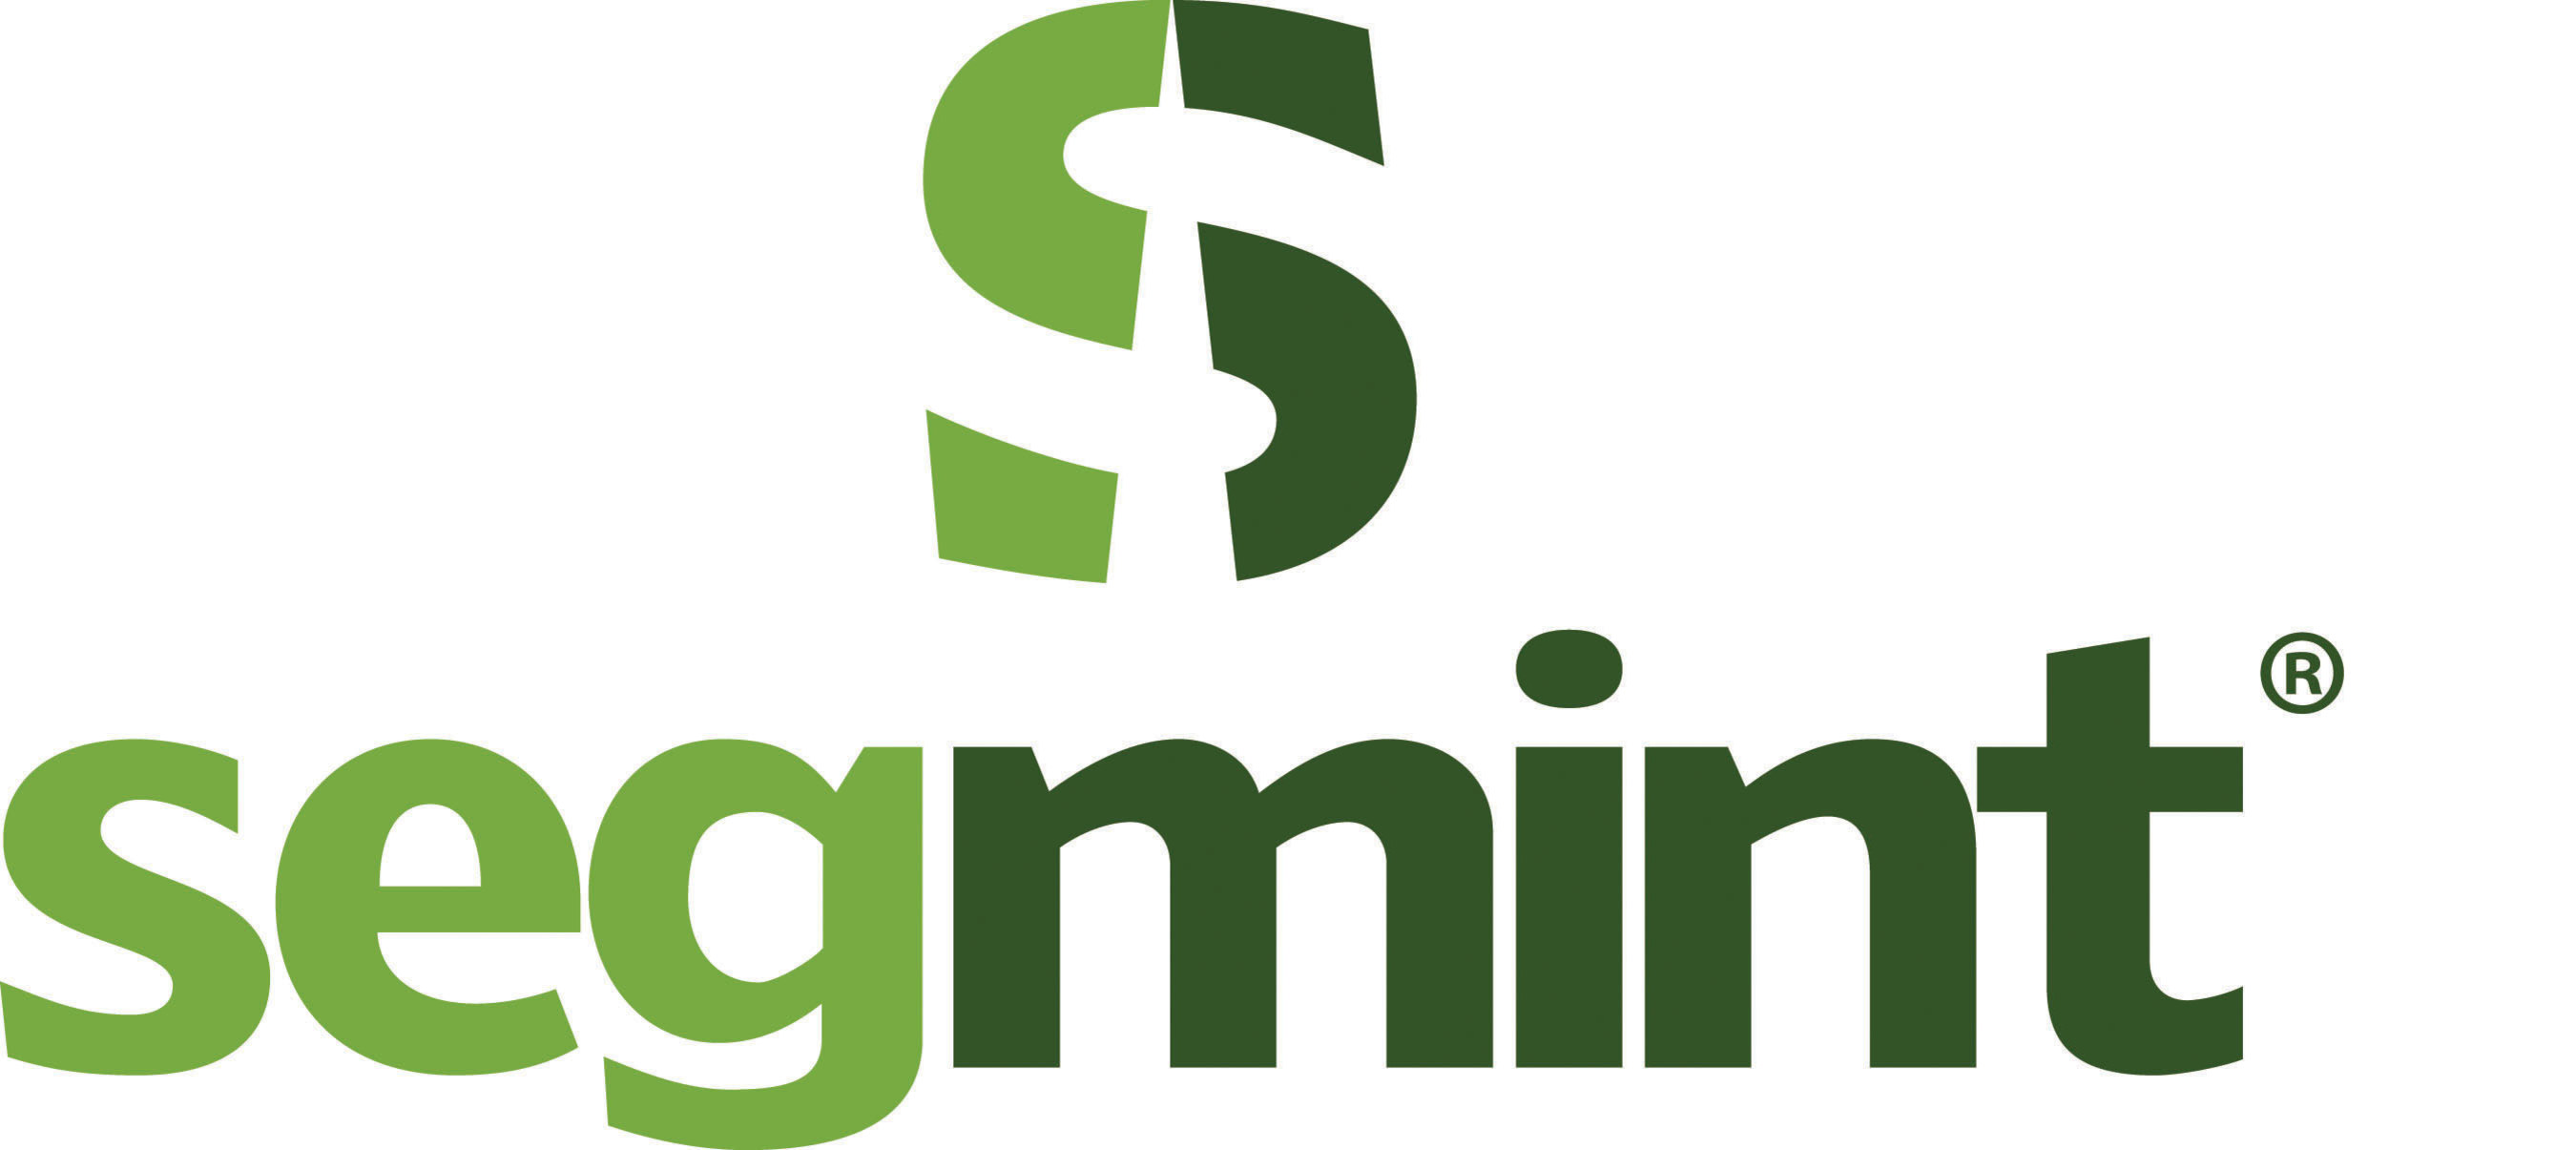 Segmint logo